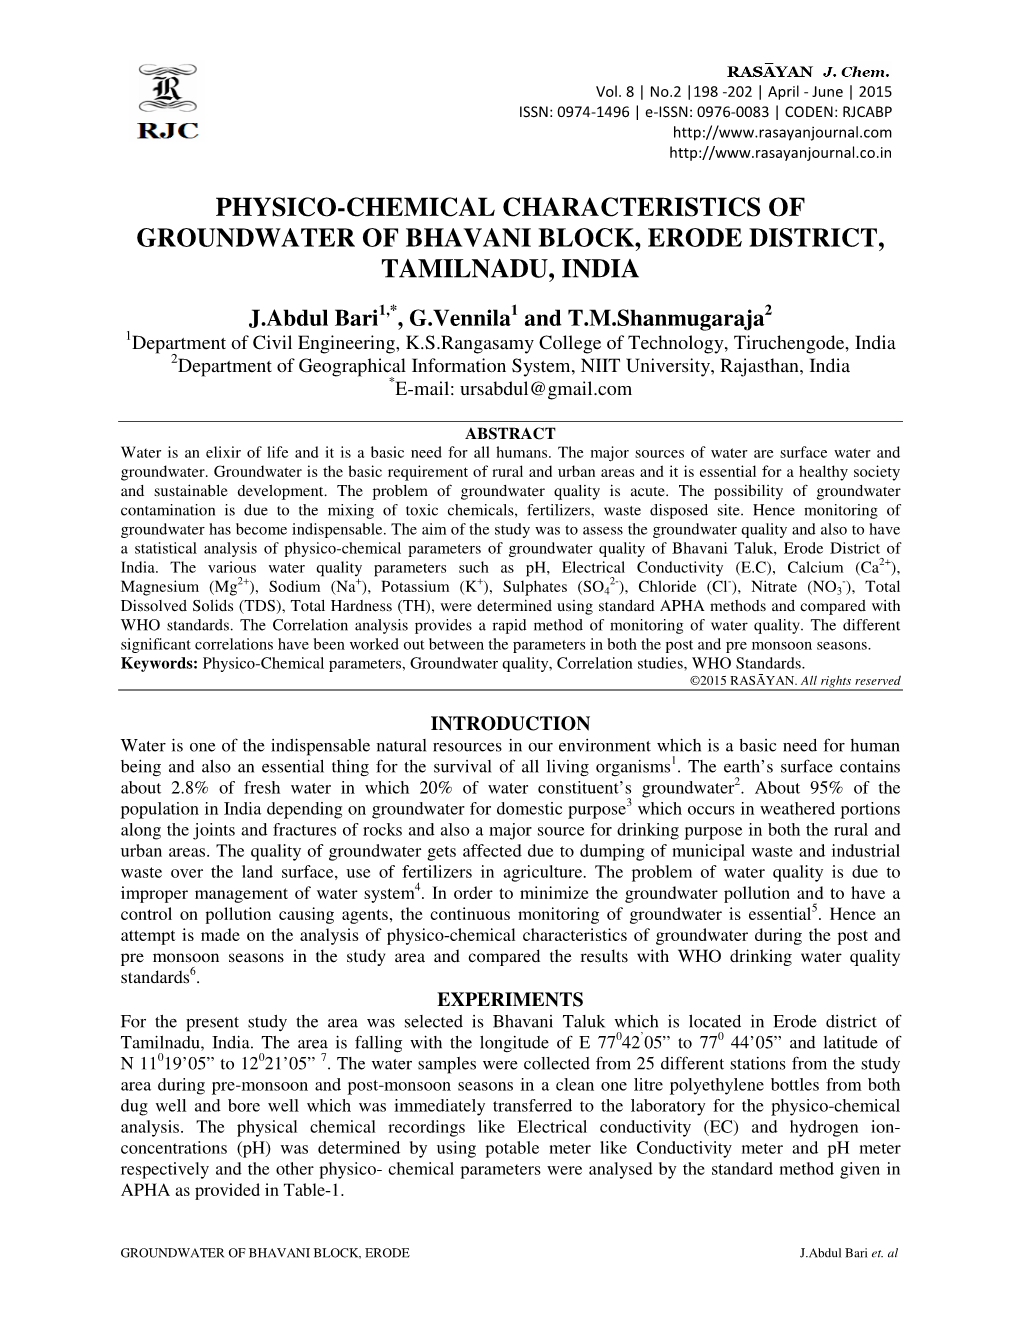 Physico-Chemical Characteristics of Groundwater of Bhavani Block, Erode District, Tamilnadu, India